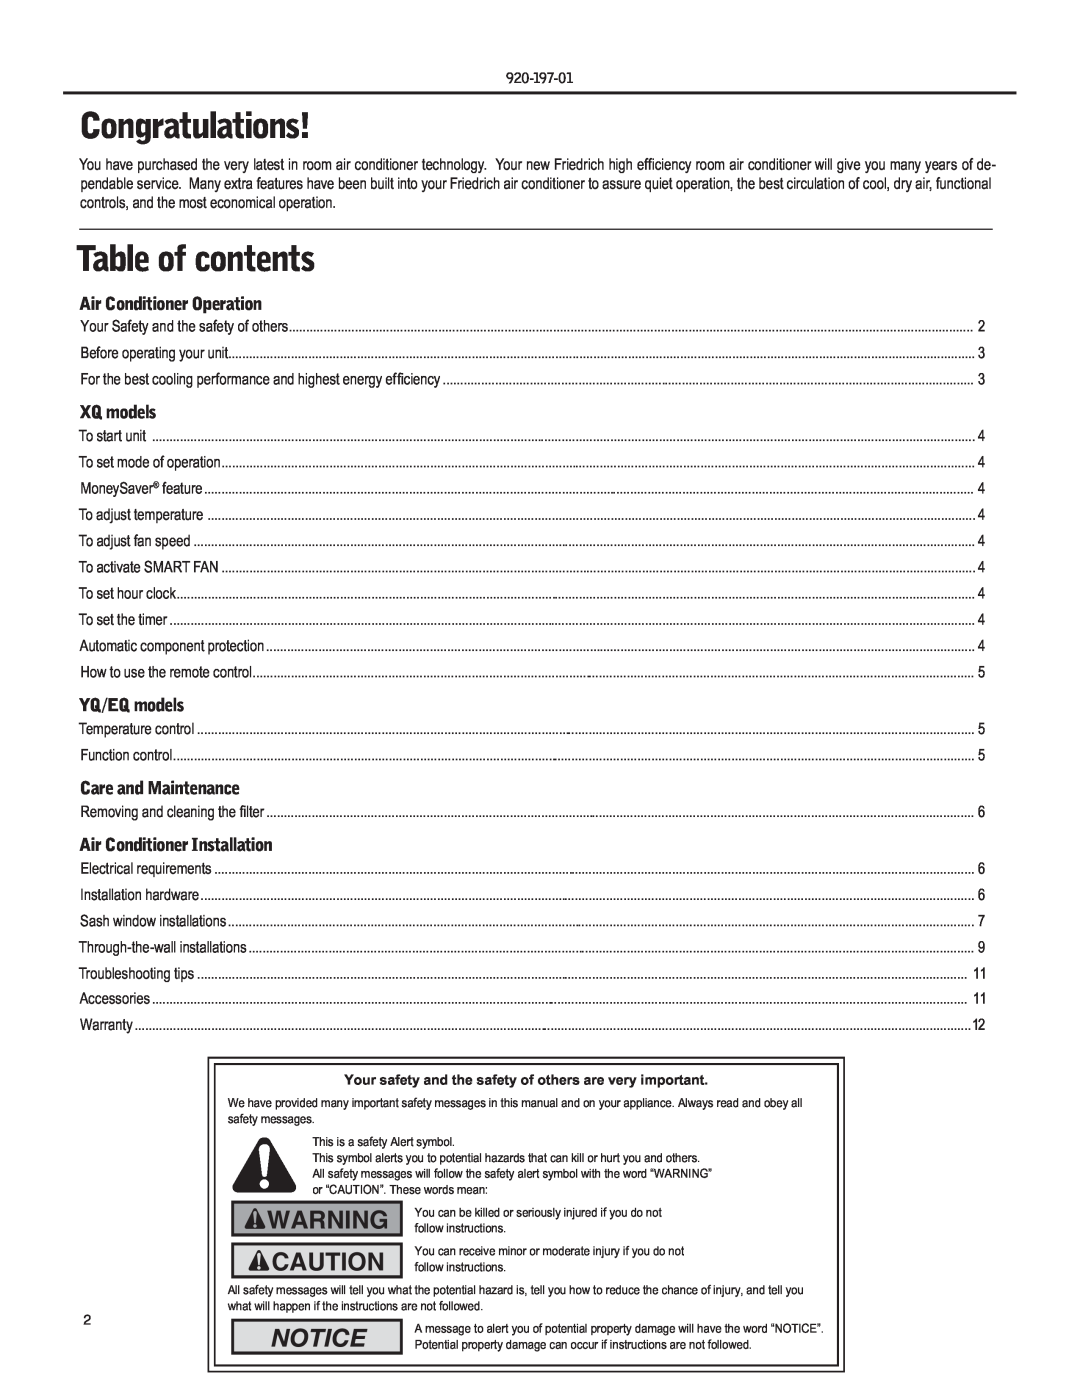 Friedrich YQ07, EQ08 operation manual Congratulations, Table of contents, Air Conditioner Operation, XQ models, YQ/EQ models 